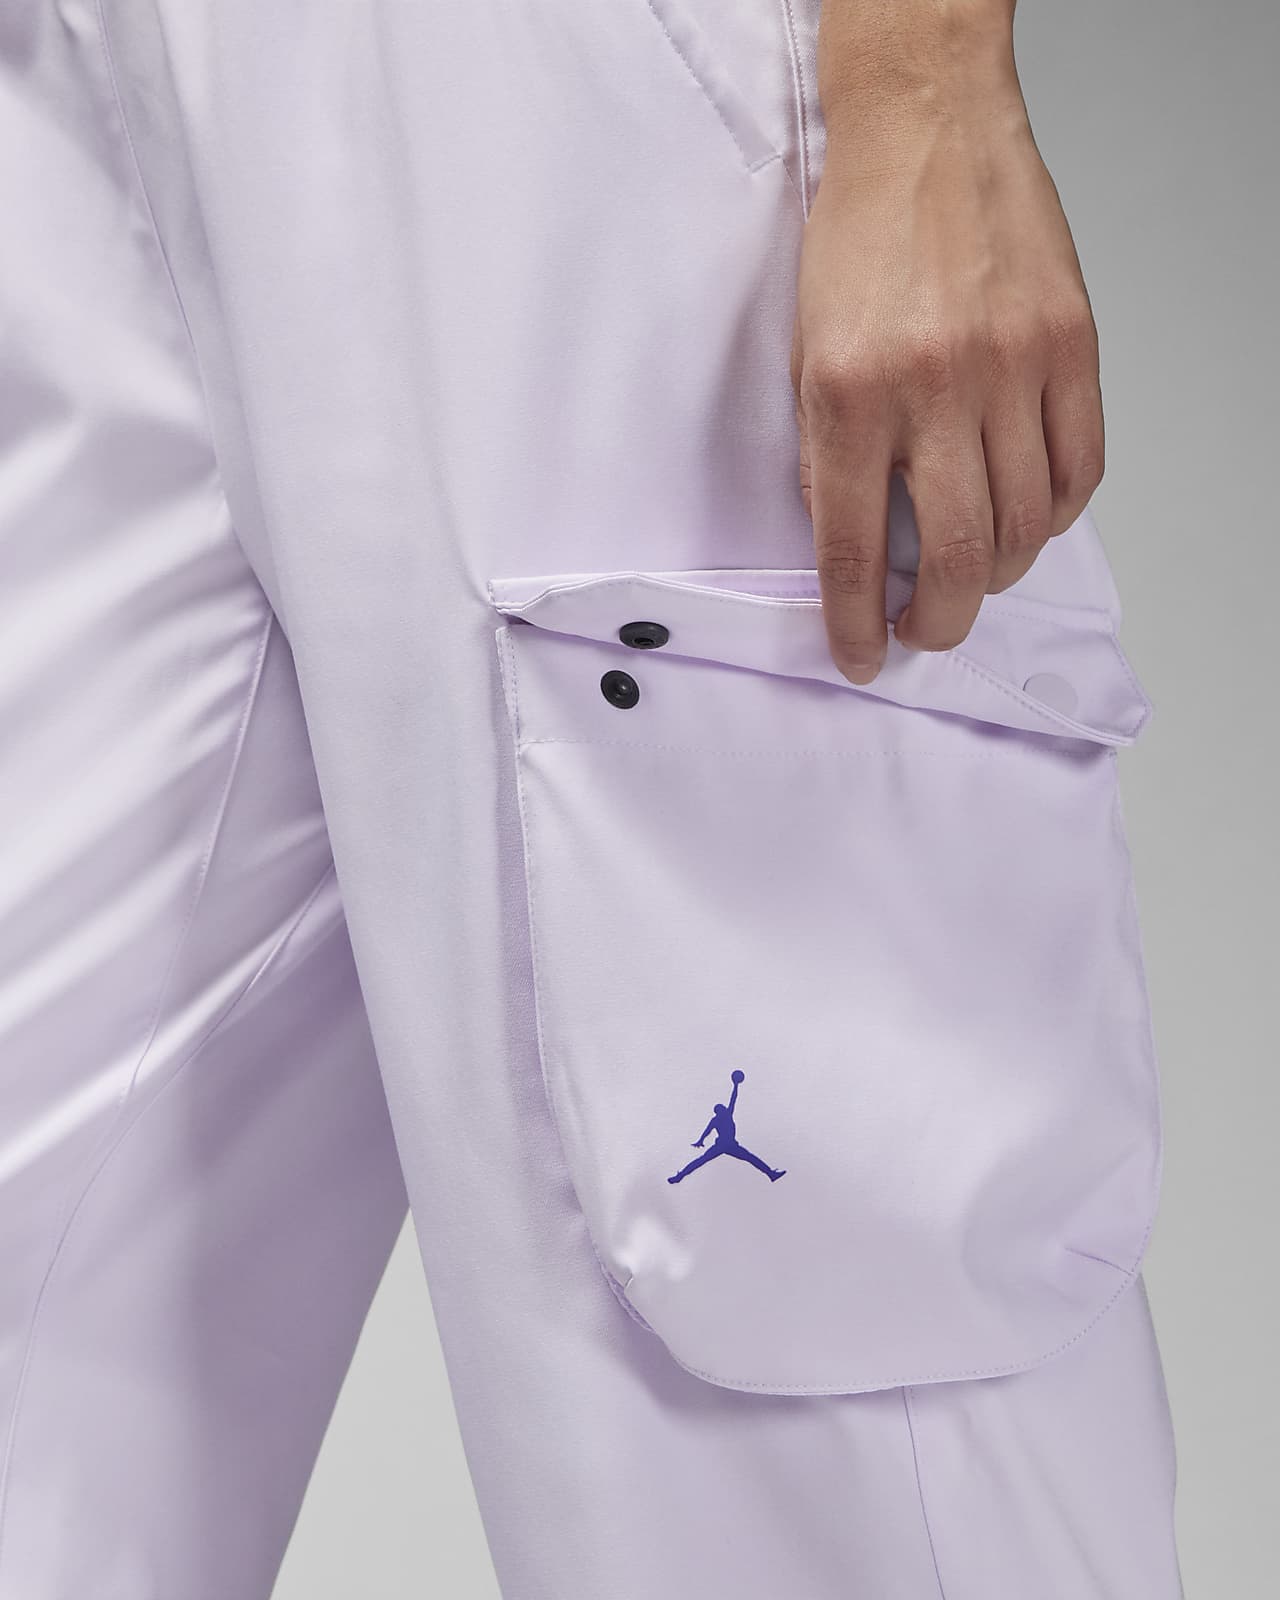 Jordan Sport Tunnel Pantalón - Mujer. Nike ES